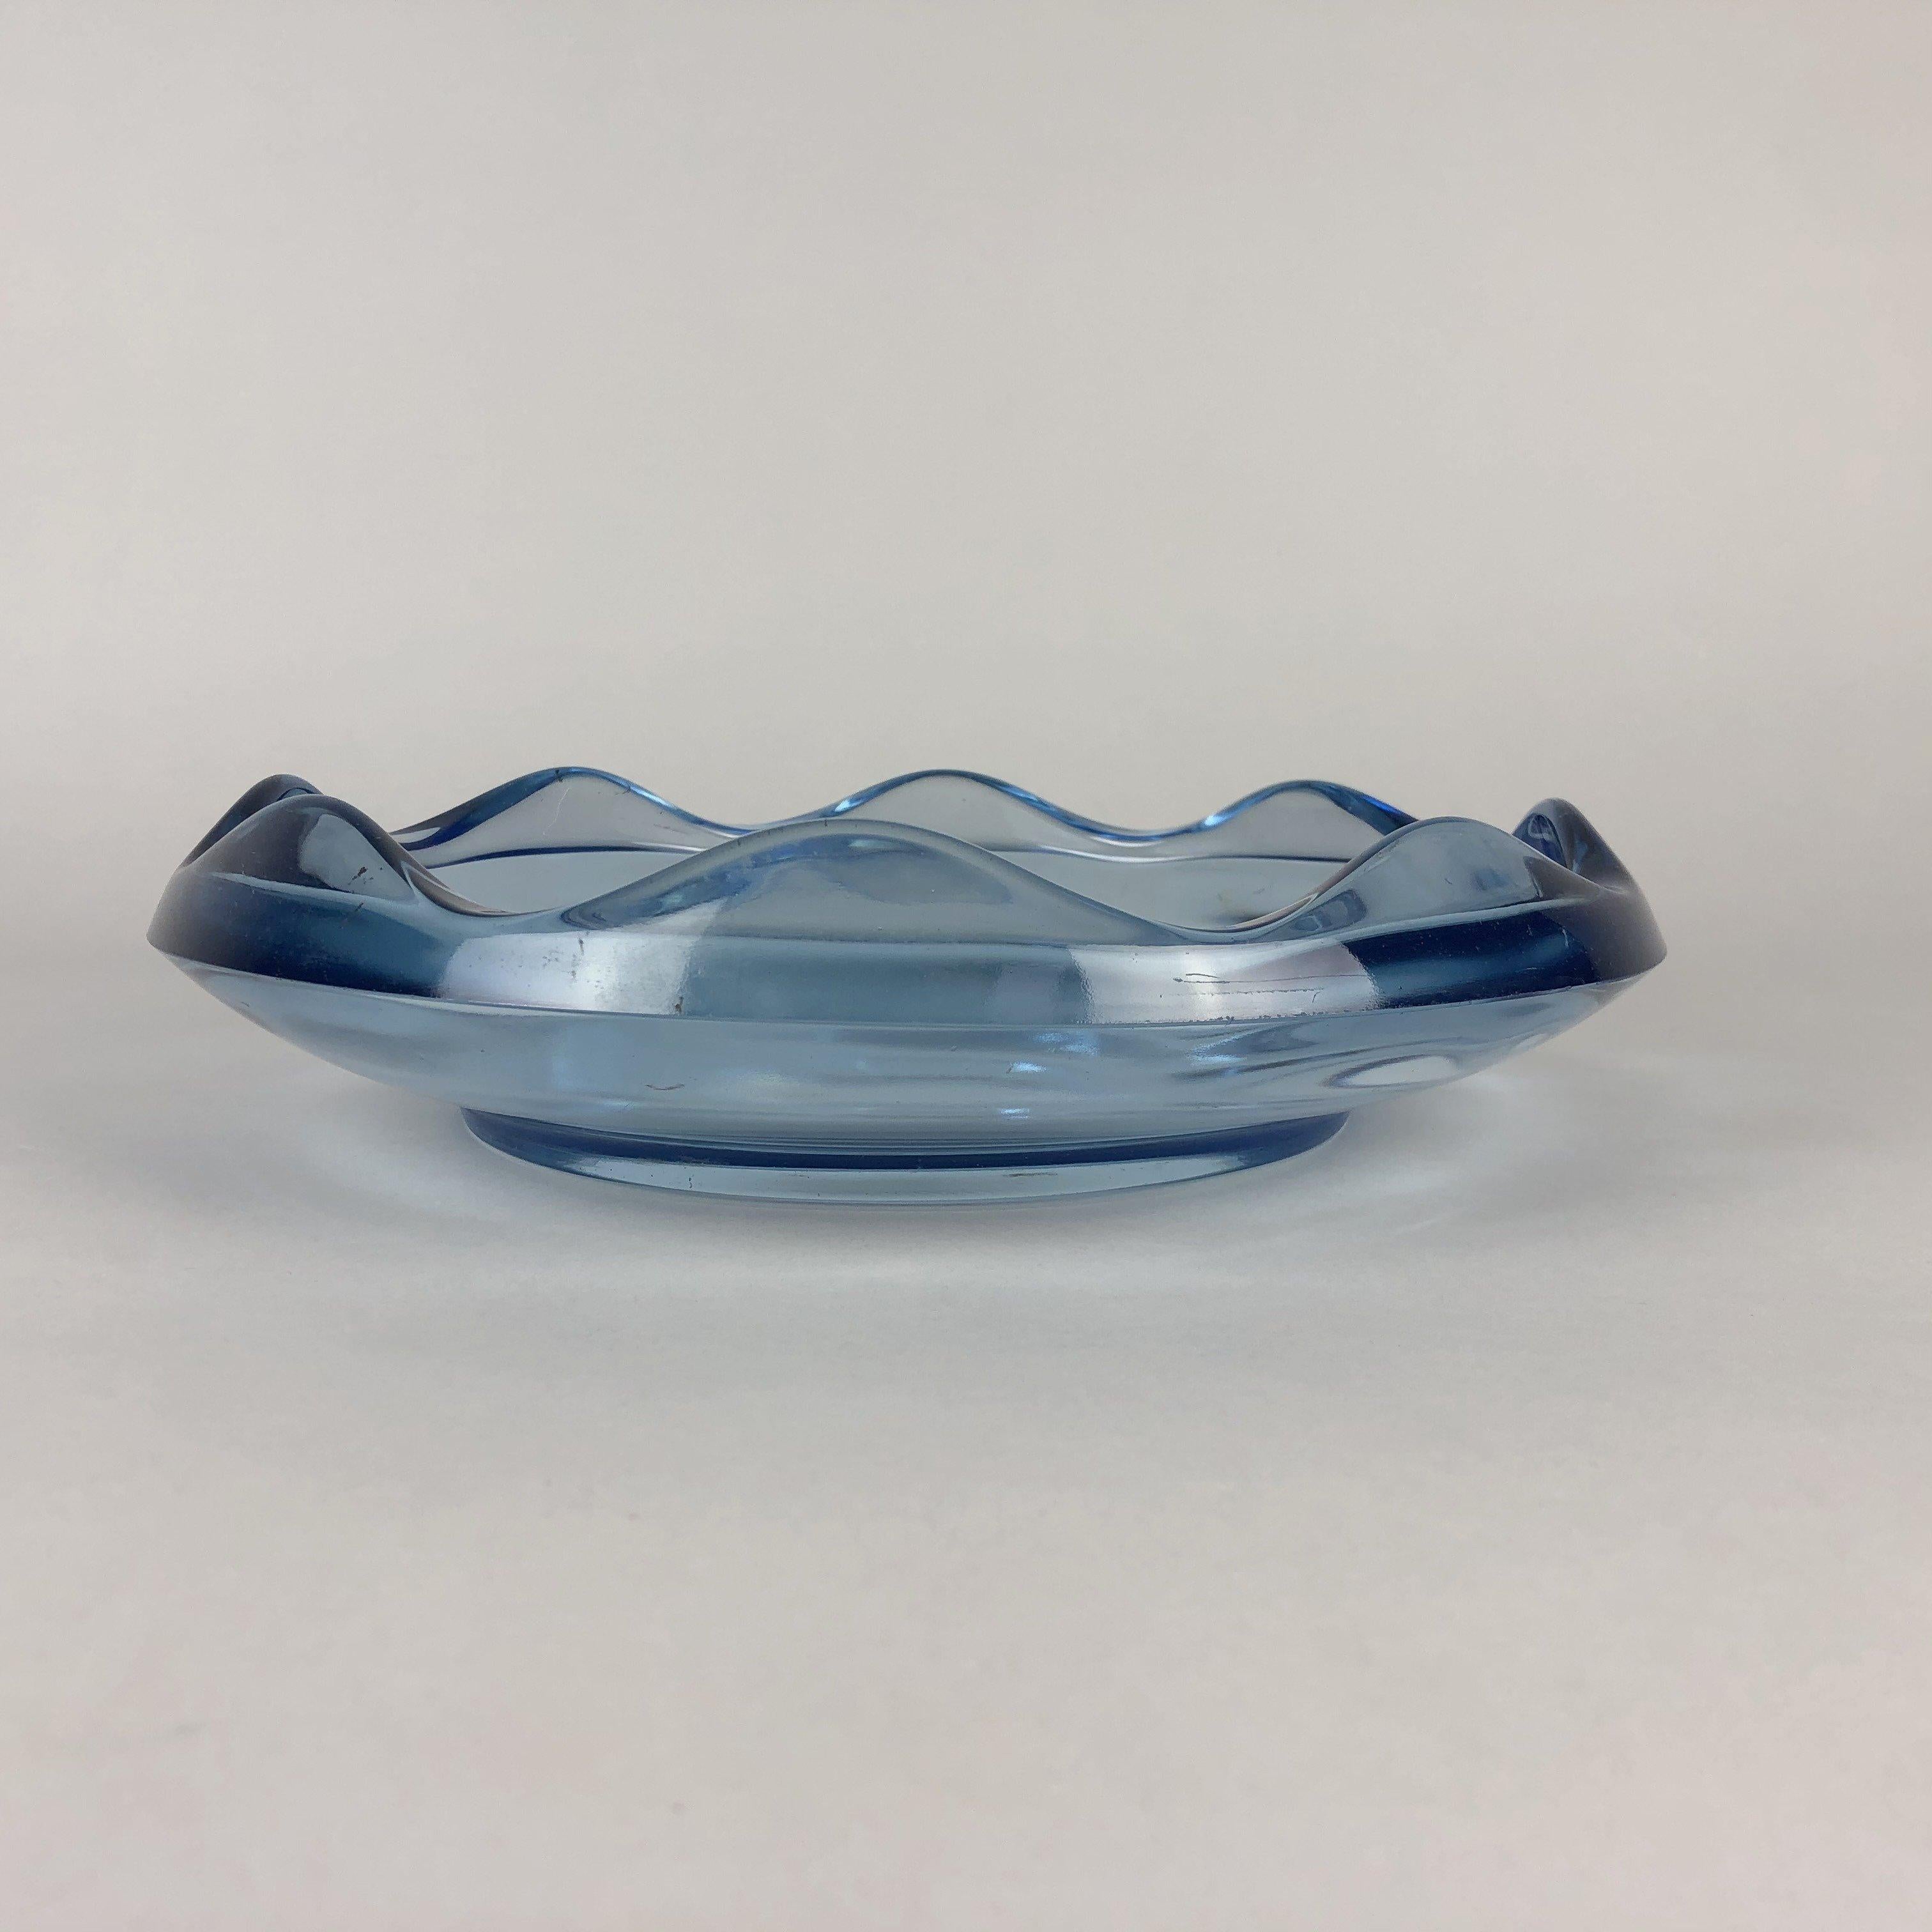 Heavy, blue glass bowl designed by Rudol Jurnikl in Czechoslovakia in the 1960s.
 